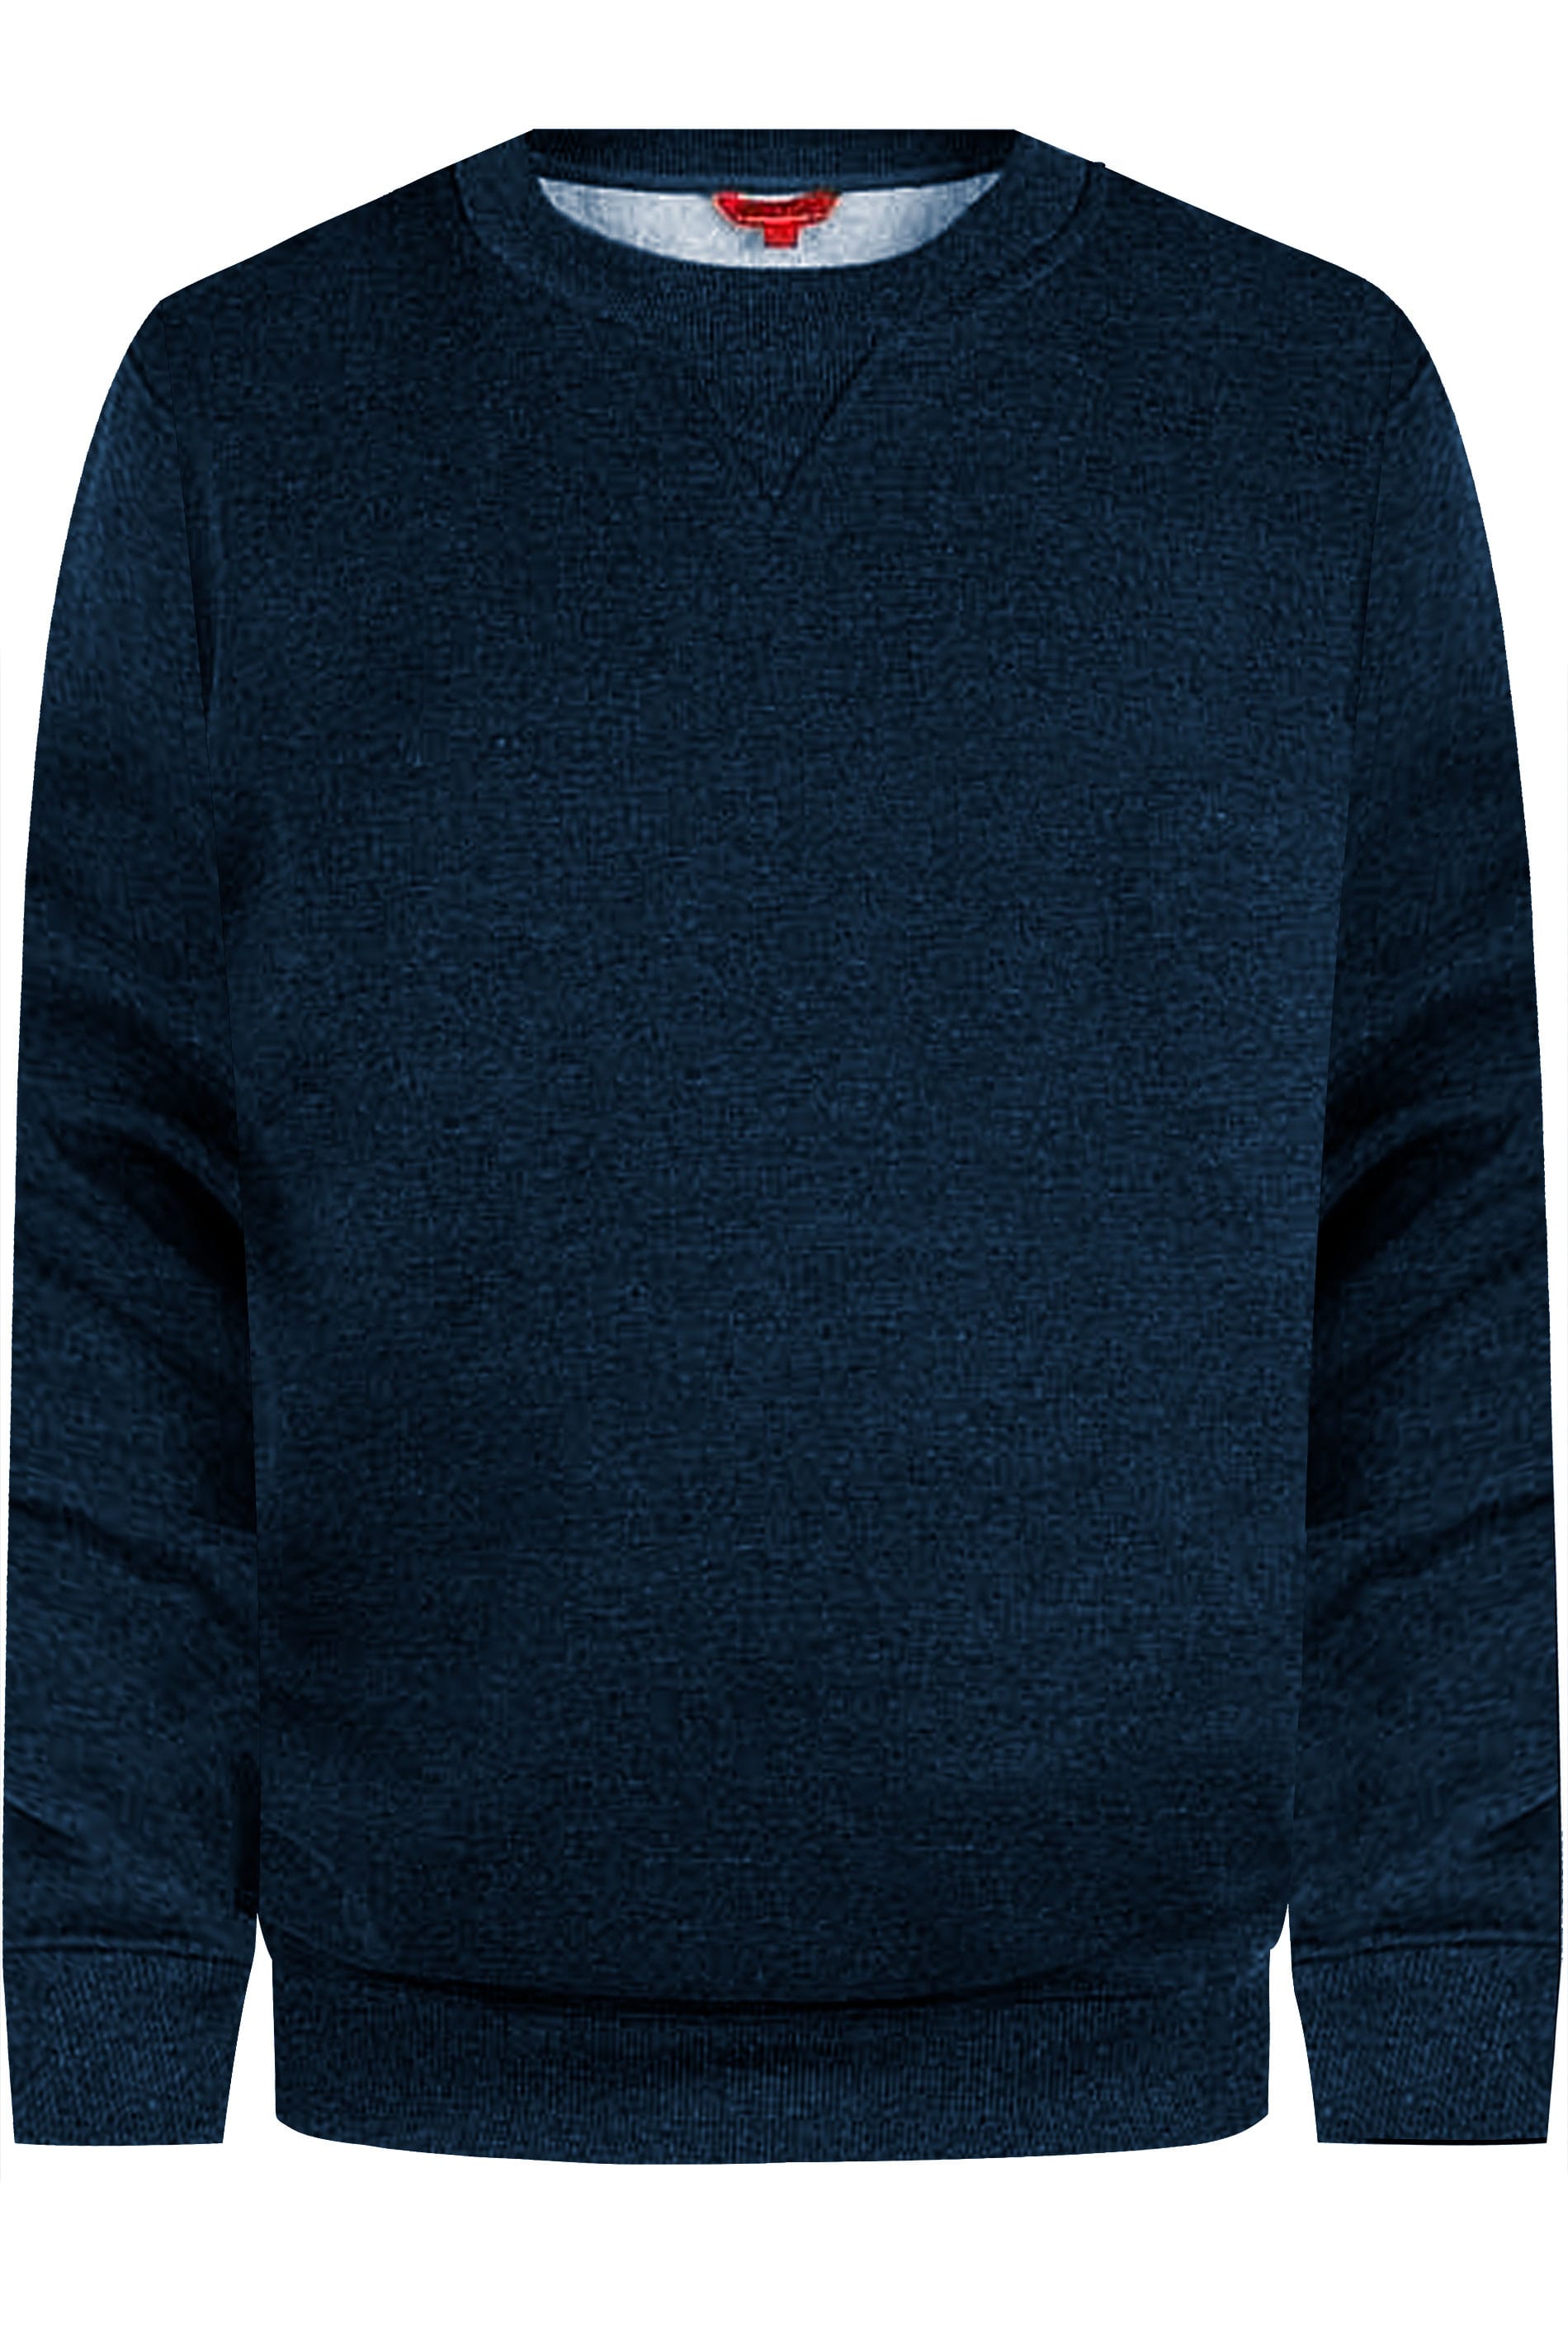 D555 Big & Tall Rockford Navy Blue Sweatshirt_638b.jpg